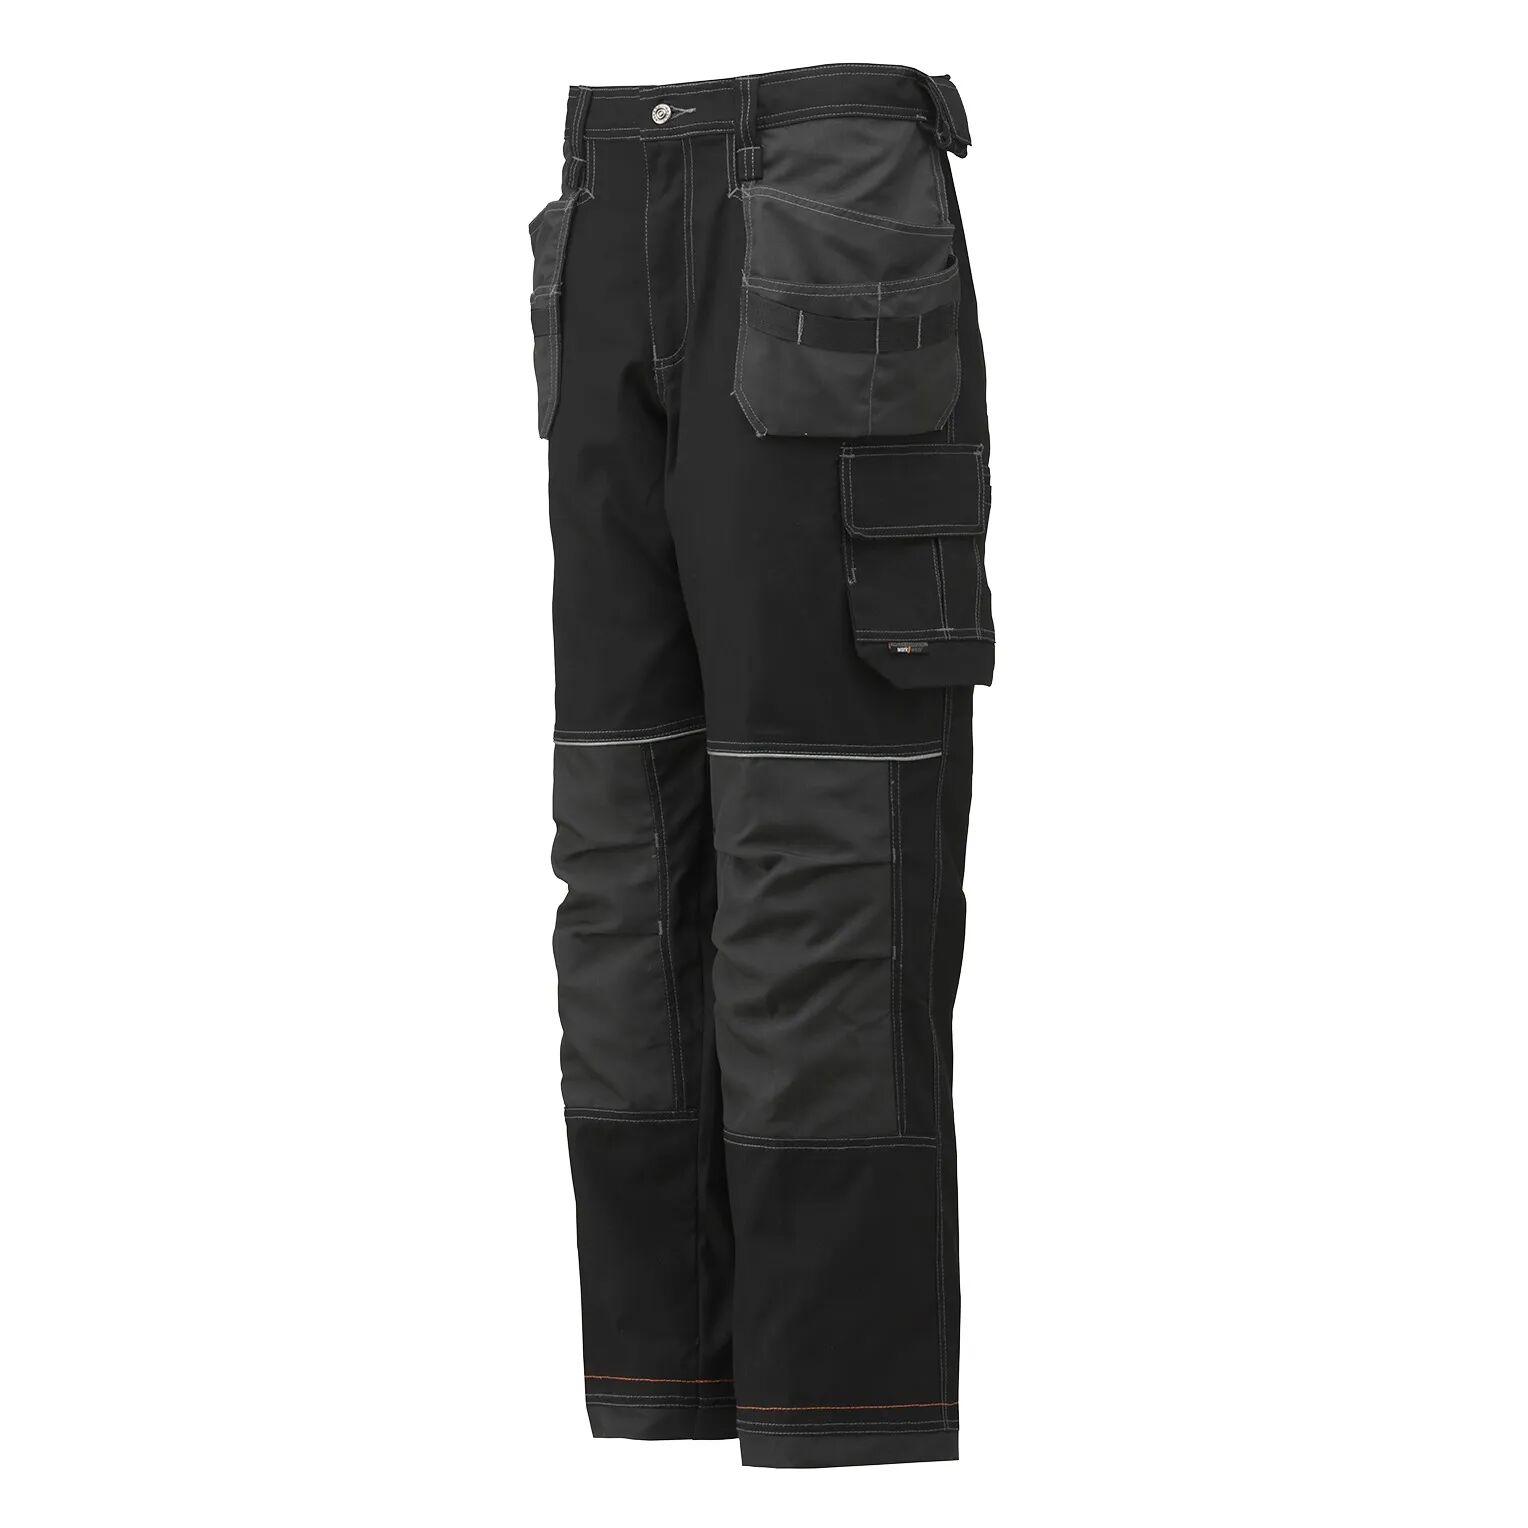 HH Workwear Helly Hansen WorkwearChelsea Durable Reflective Construction Pants Black 30/34